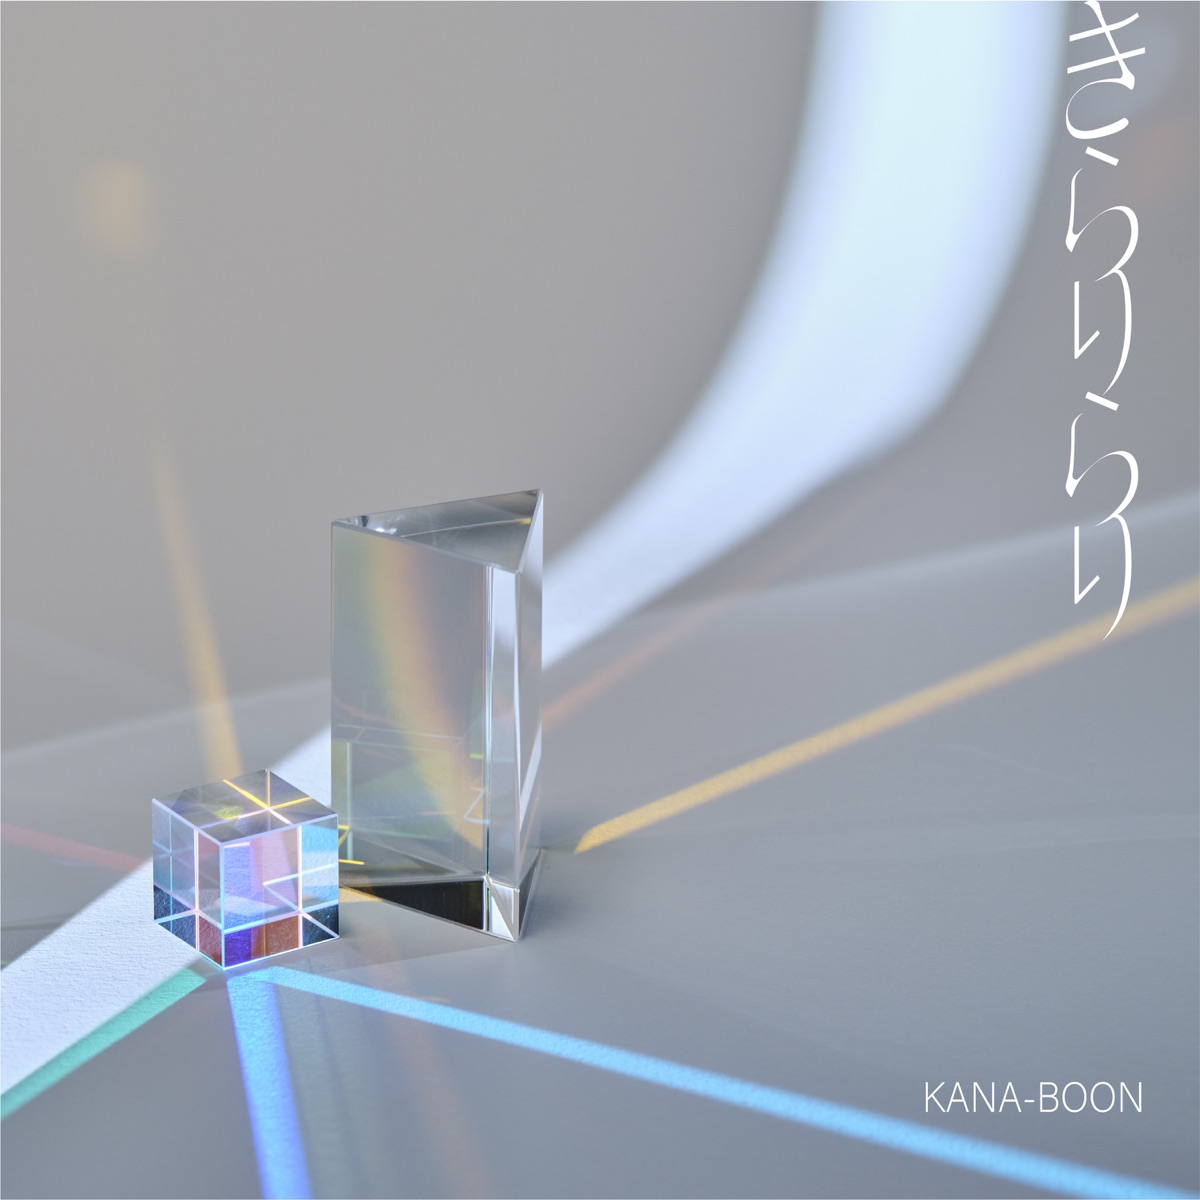 Cover art for『KANA-BOON - きらりらり』from the release『Kirarirari